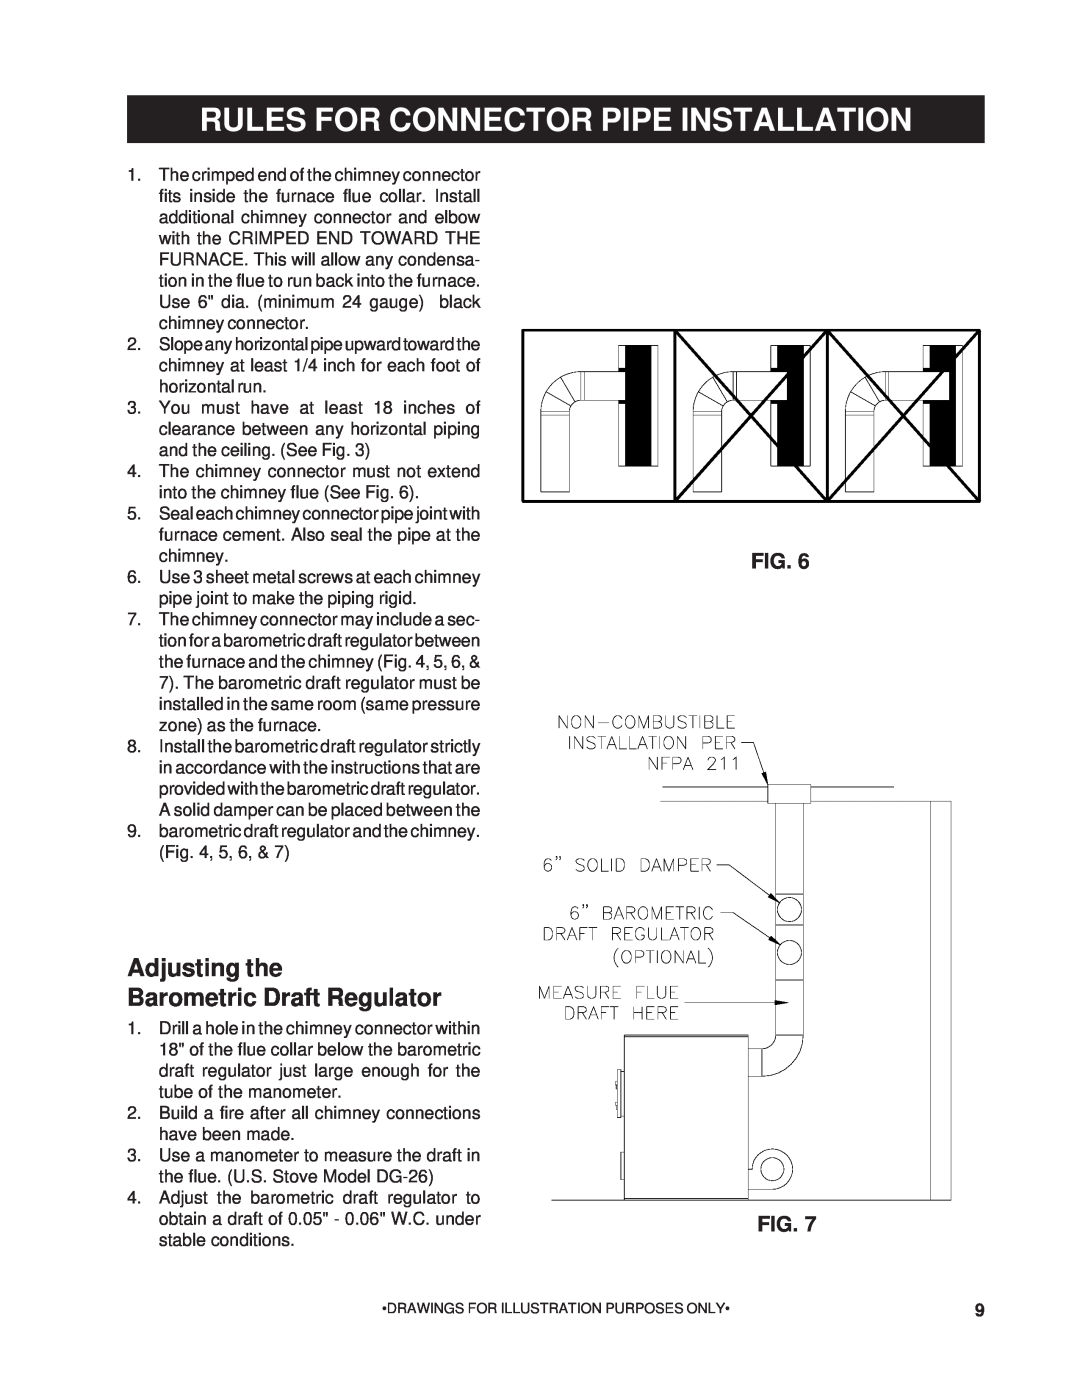 United States Stove 22AF owner manual Rules For Connector Pipe Installation, Adjusting the Barometric Draft Regulator 